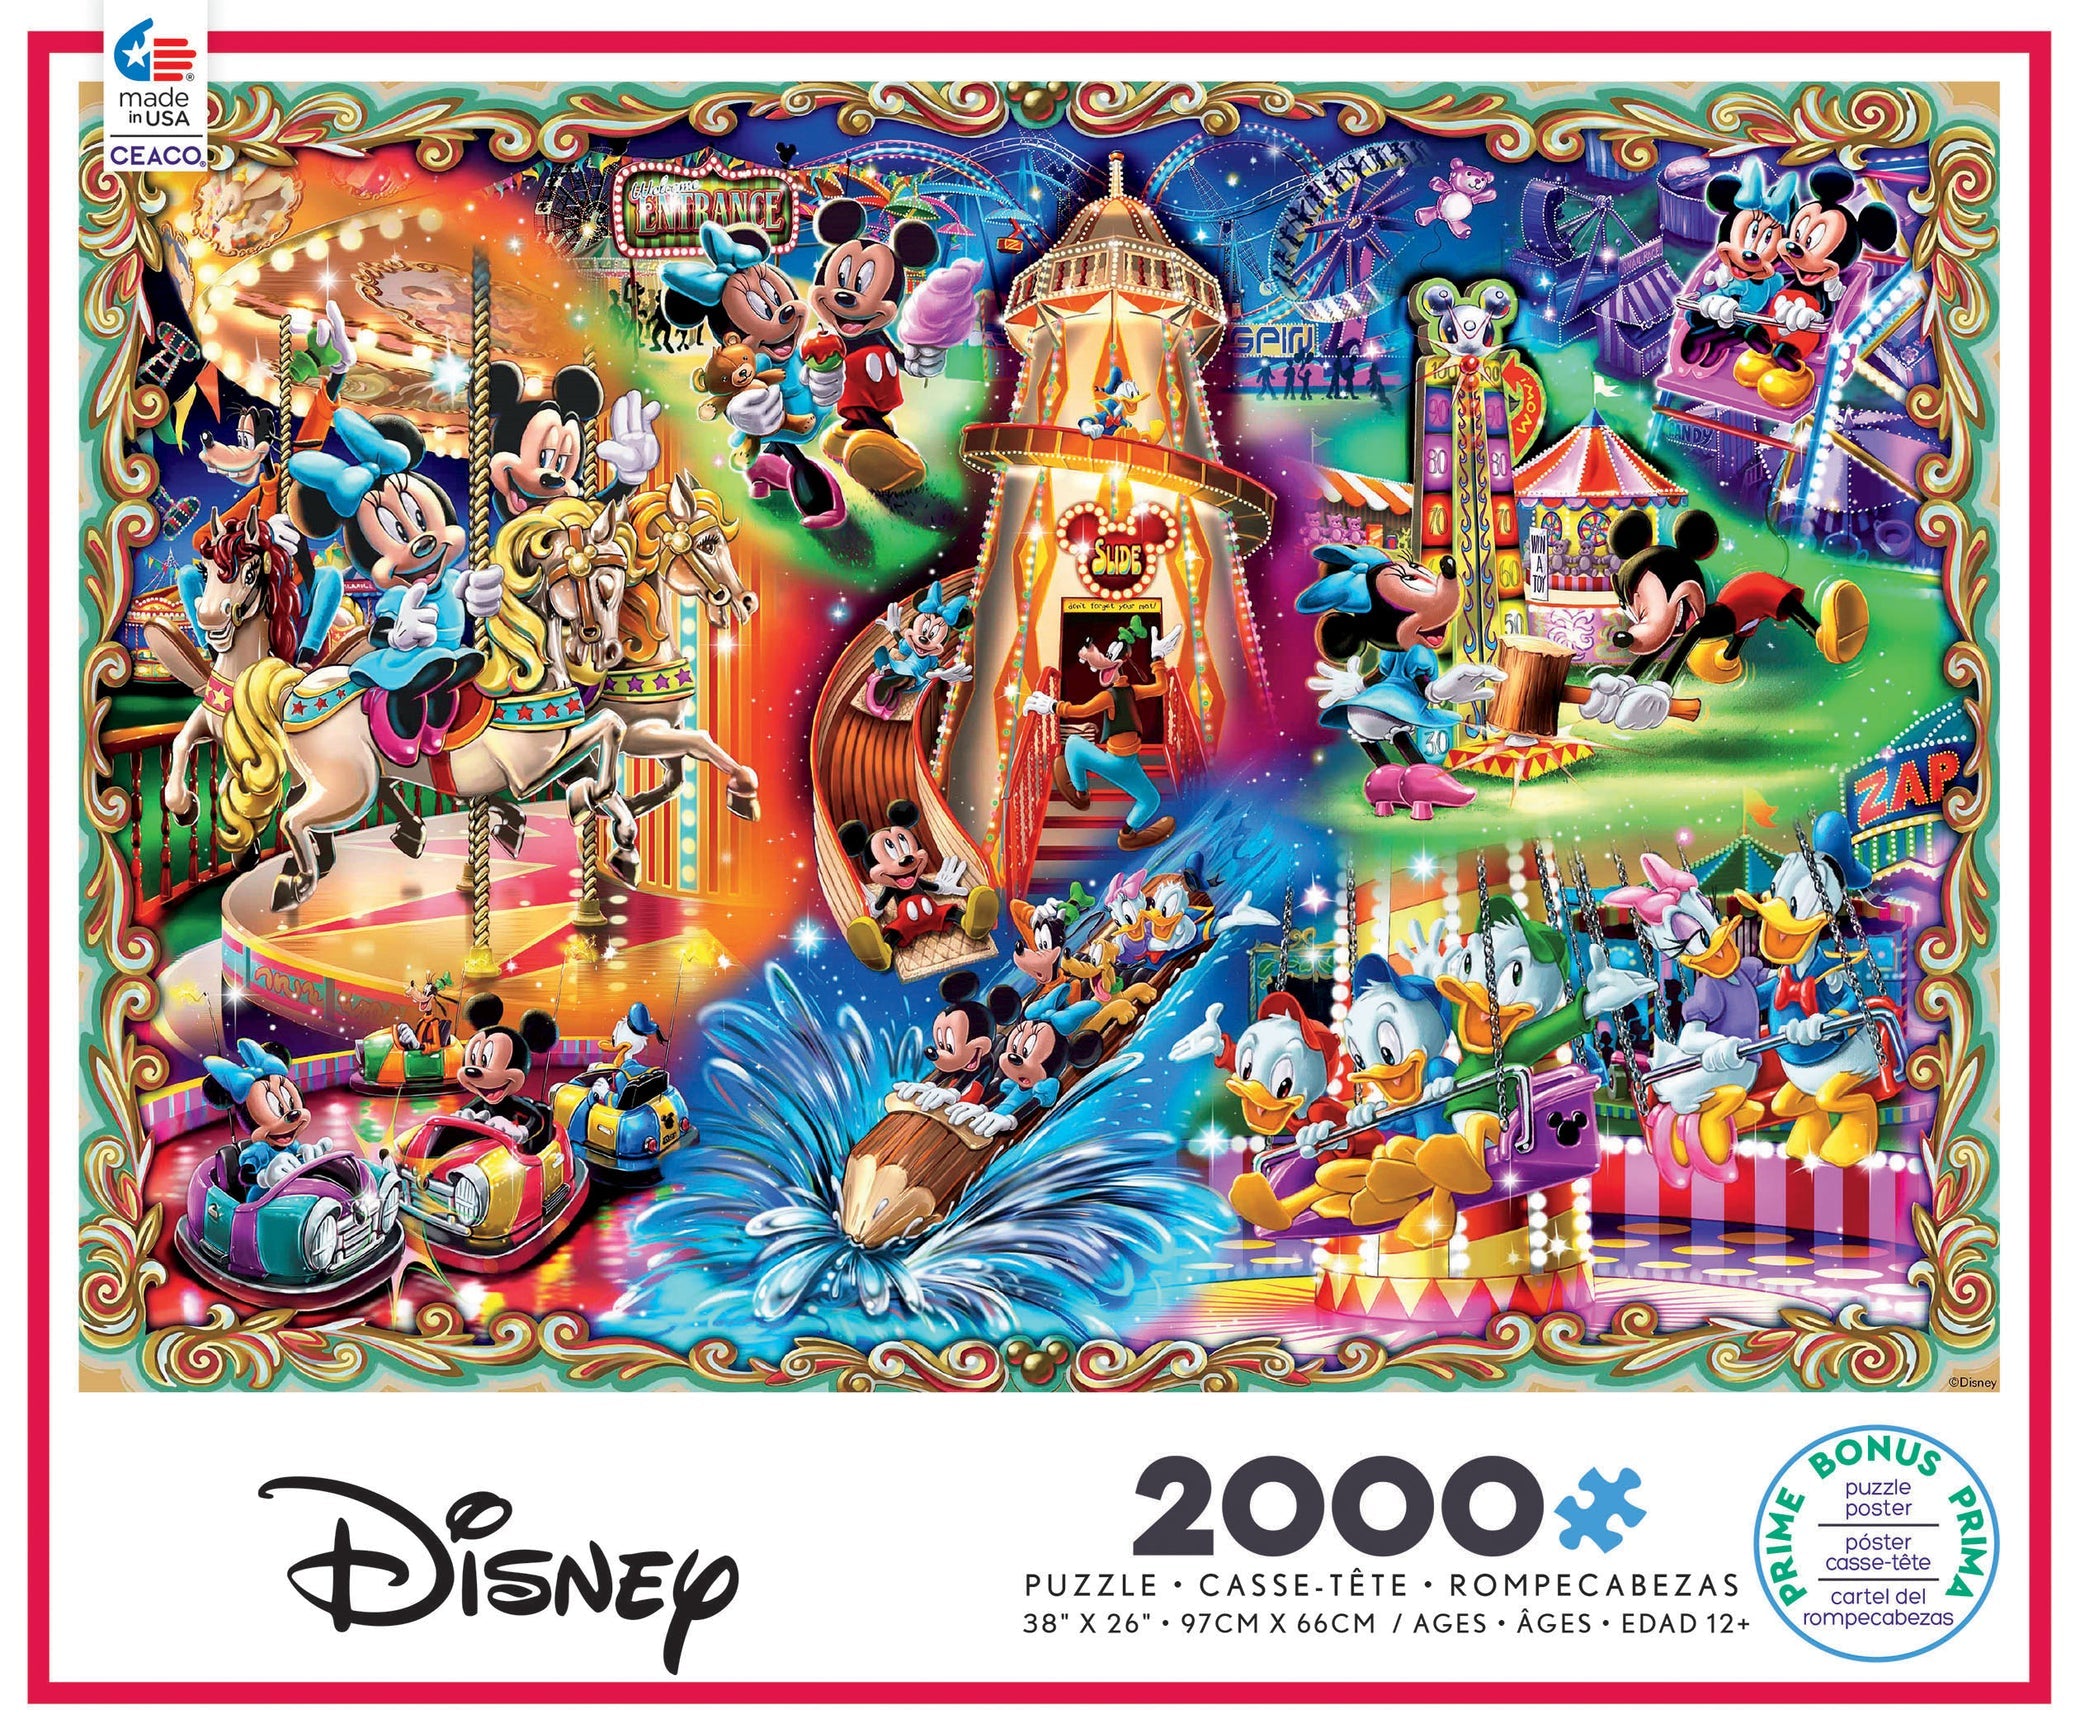 Puzzle: Disney 2000 piece – Decopolis Tulsa